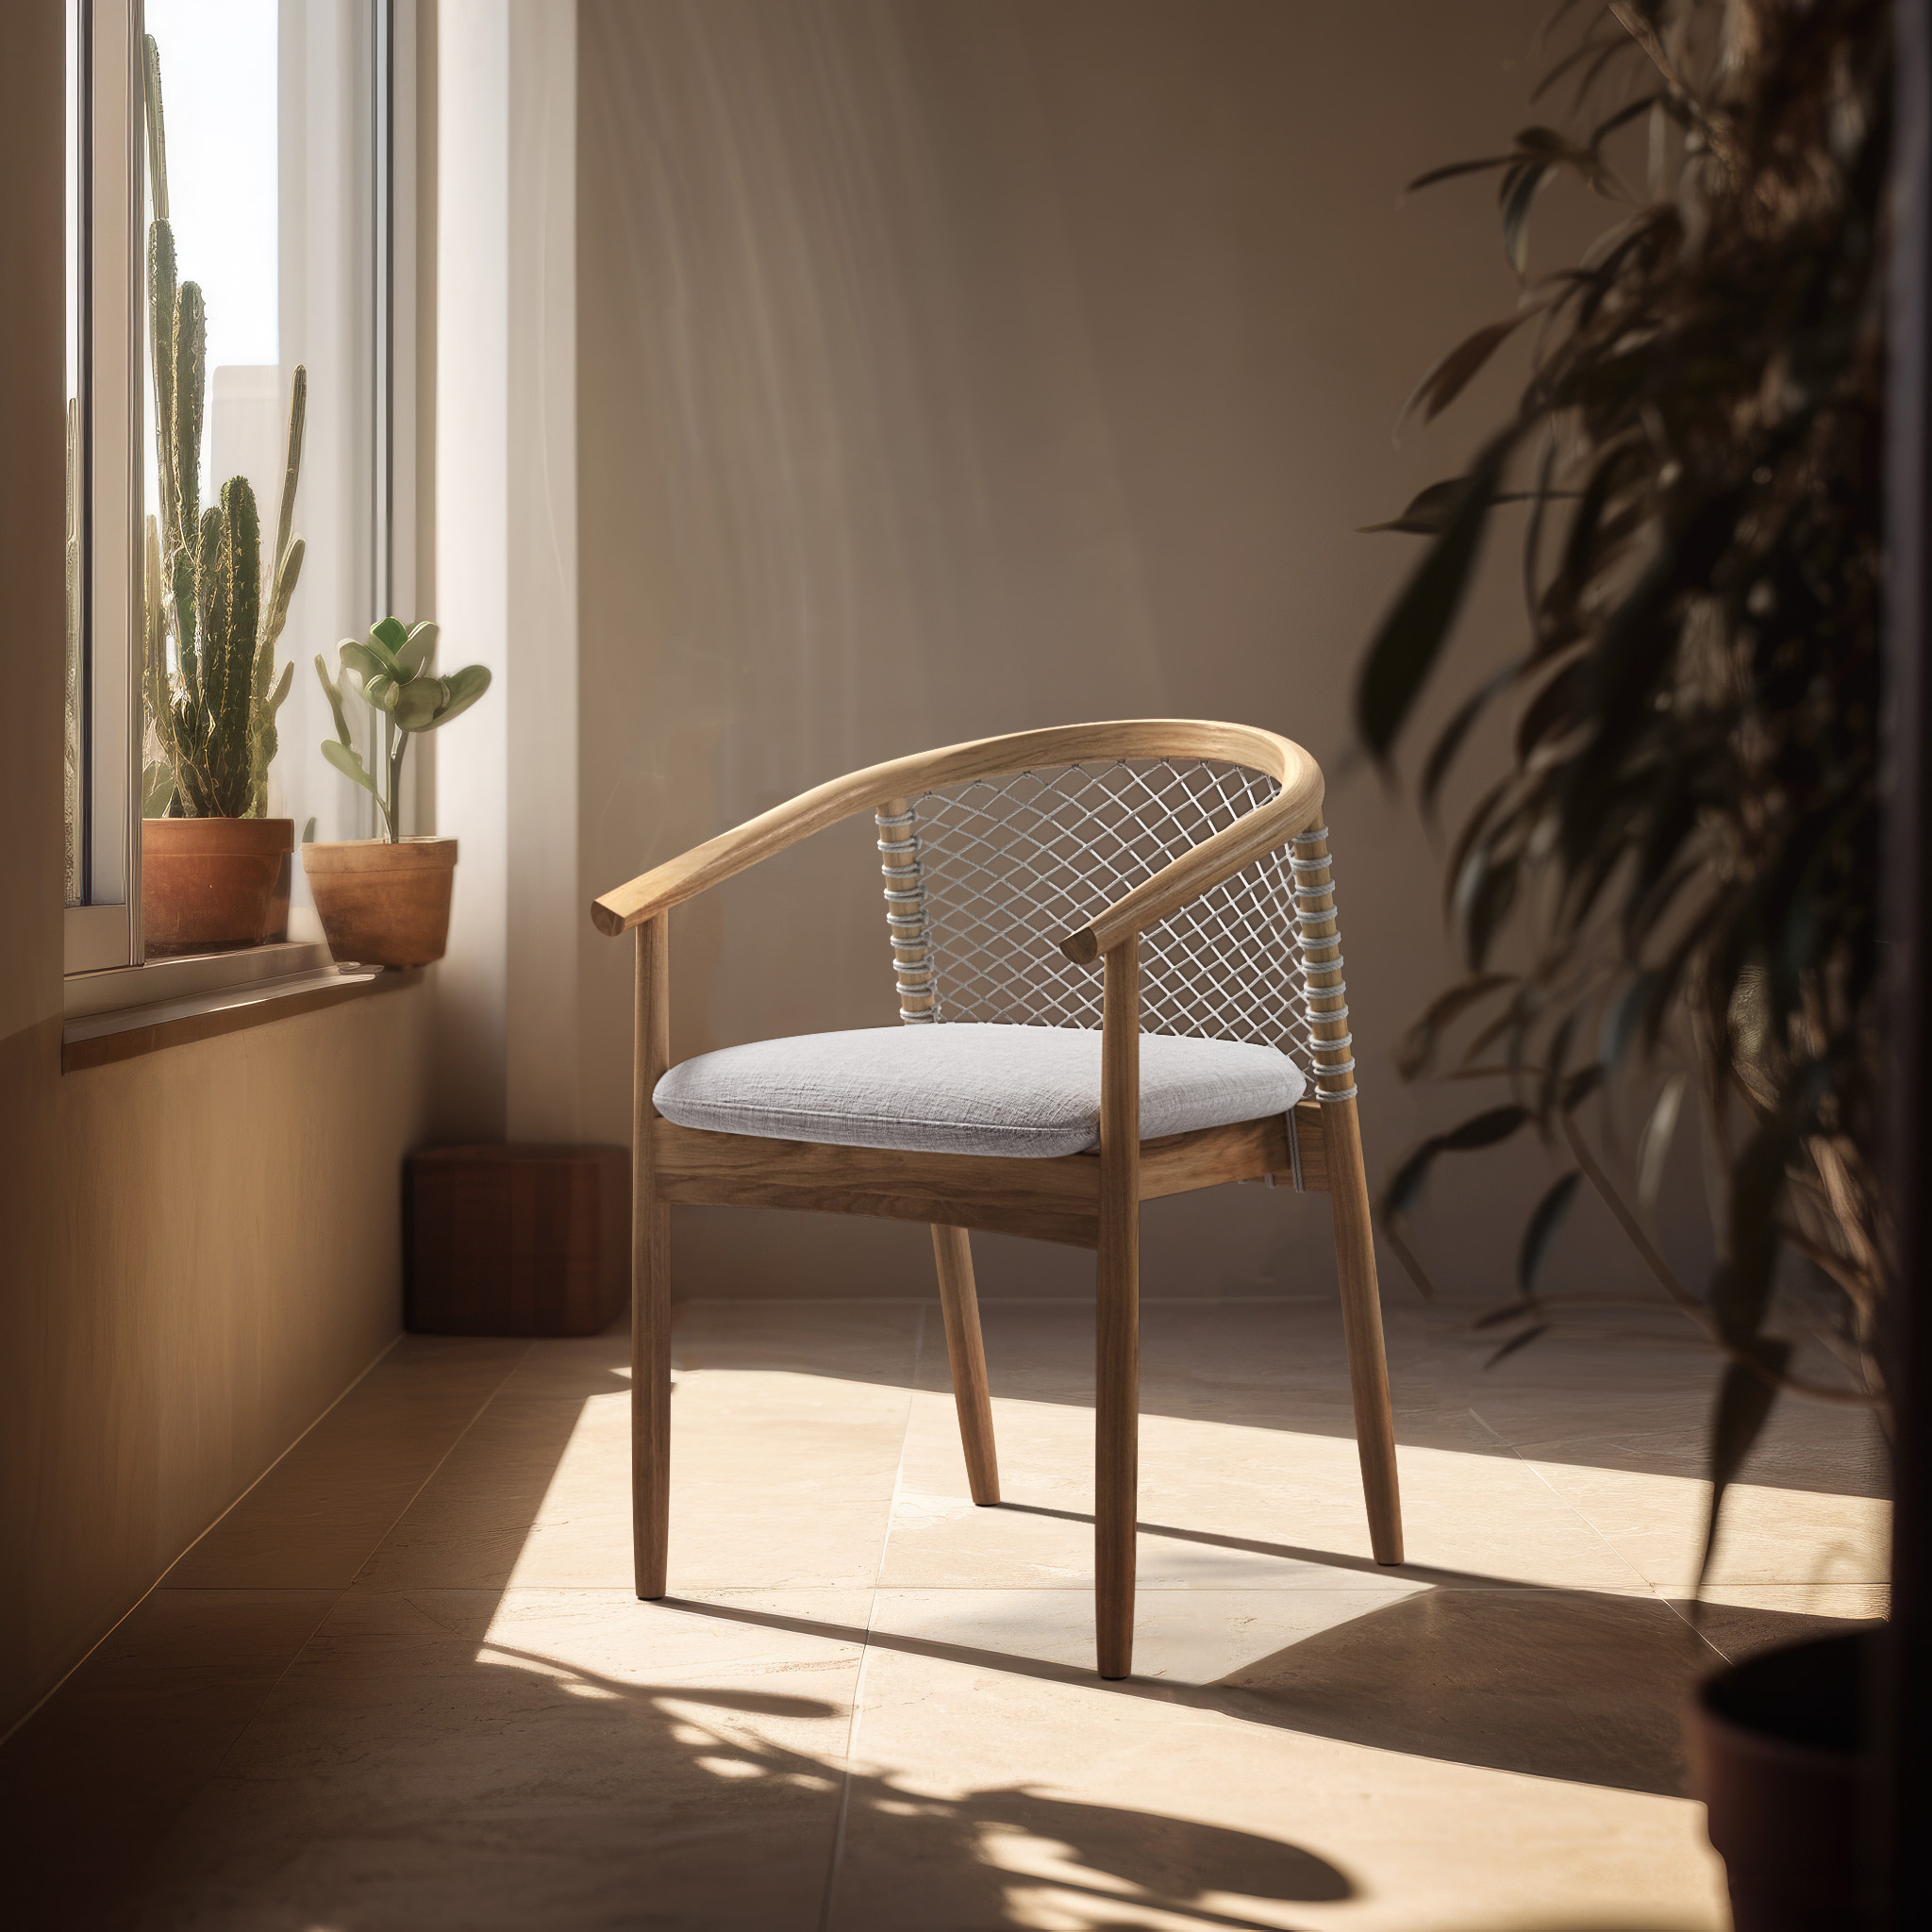 Portfolio image about chair near the window